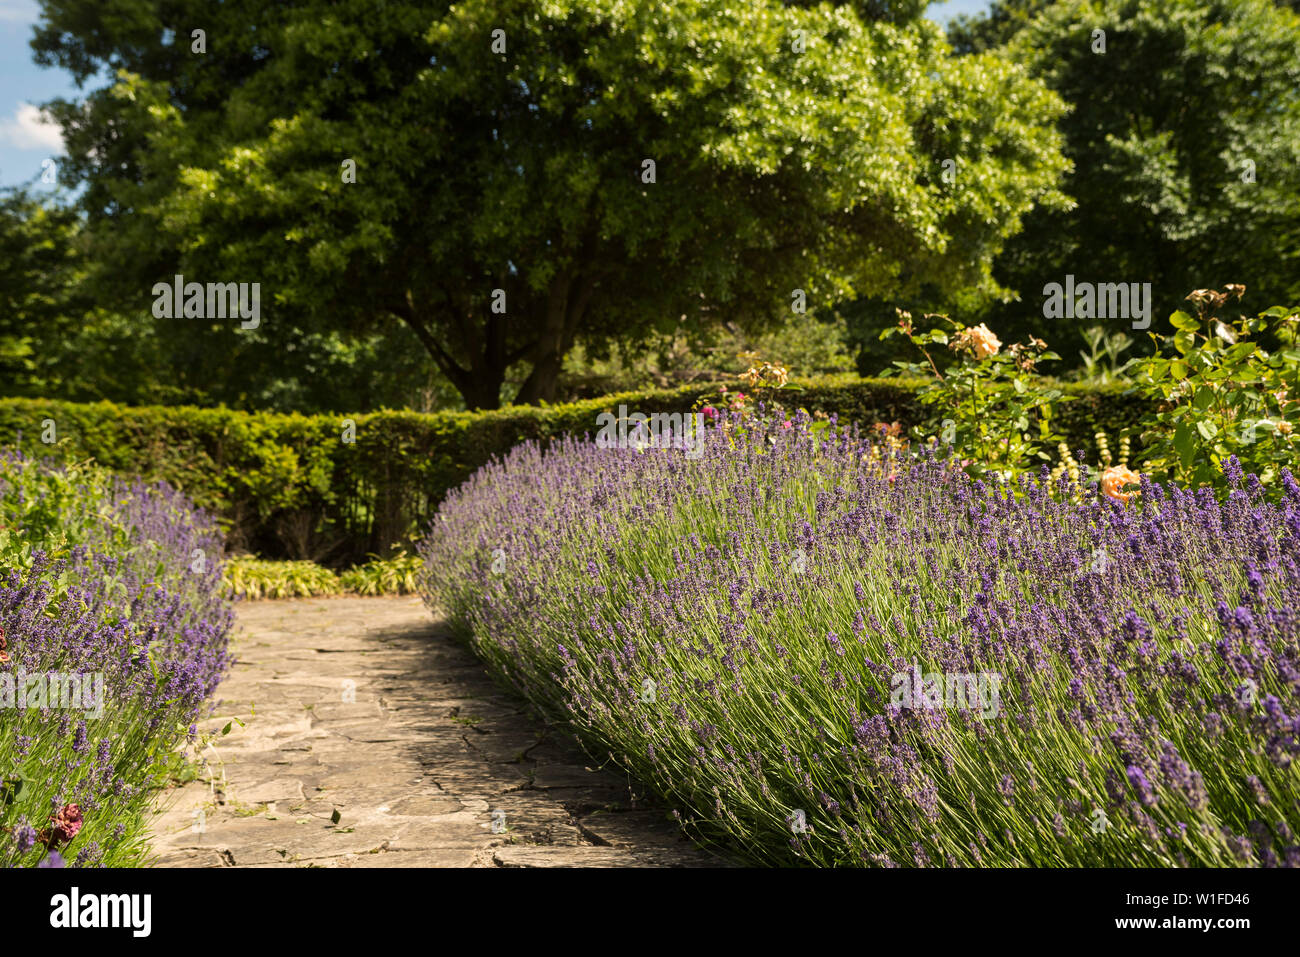 English Lavender growing in a garden. Stock Photo